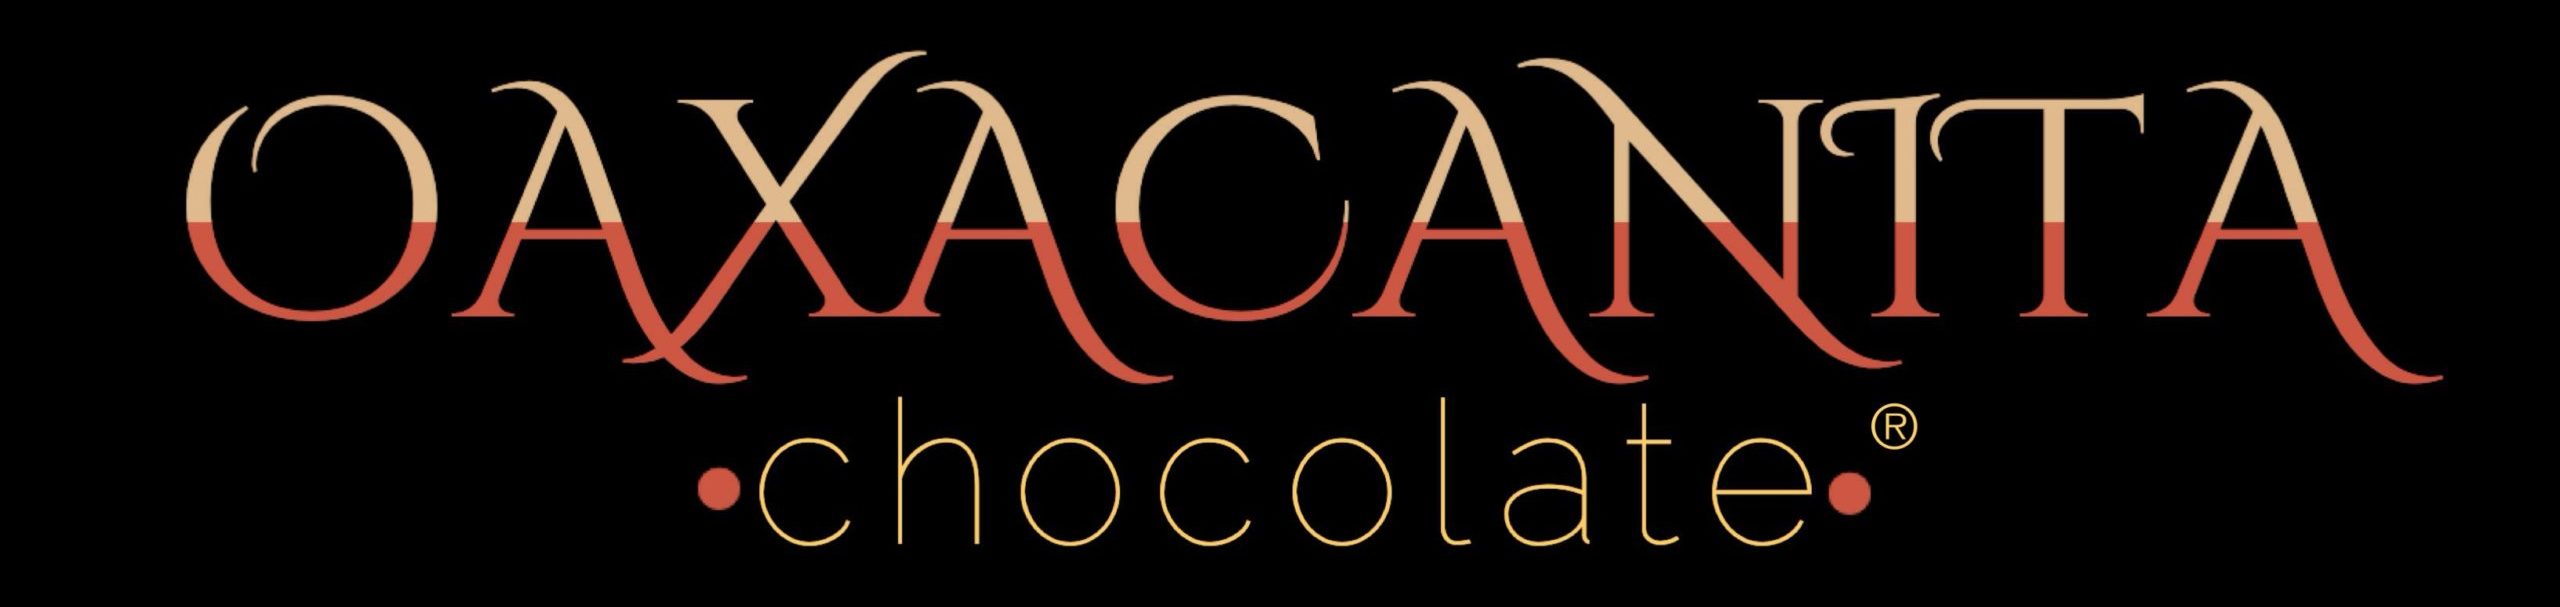 Oaxacanita Chocolate